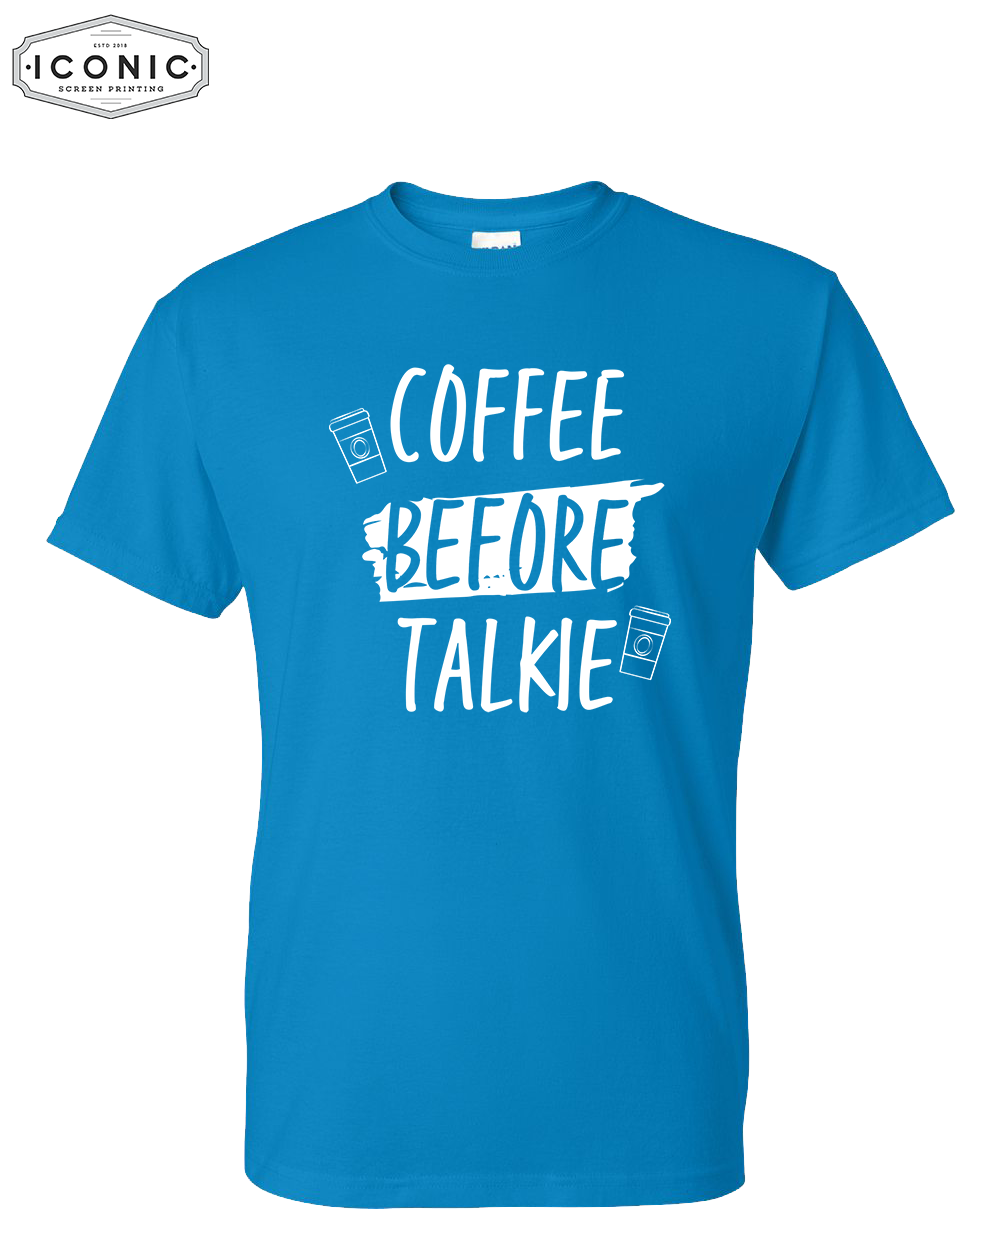 Coffee Before Talkie - DryBlend T-shirt